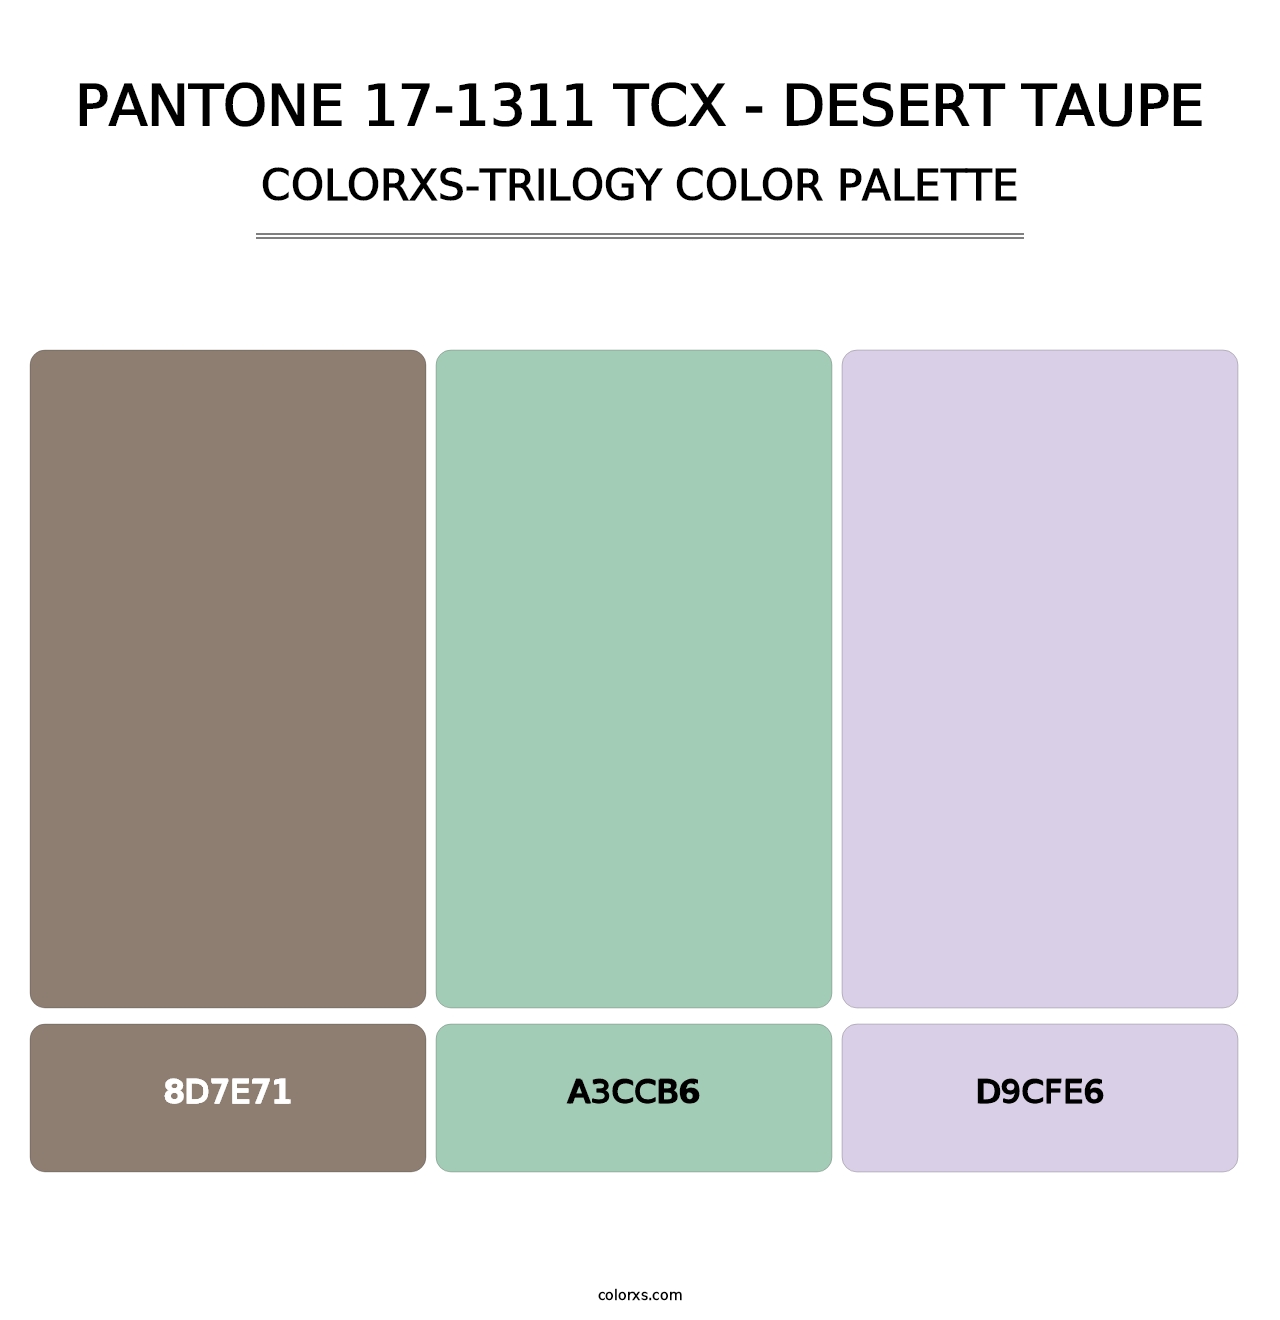 PANTONE 17-1311 TCX - Desert Taupe - Colorxs Trilogy Palette